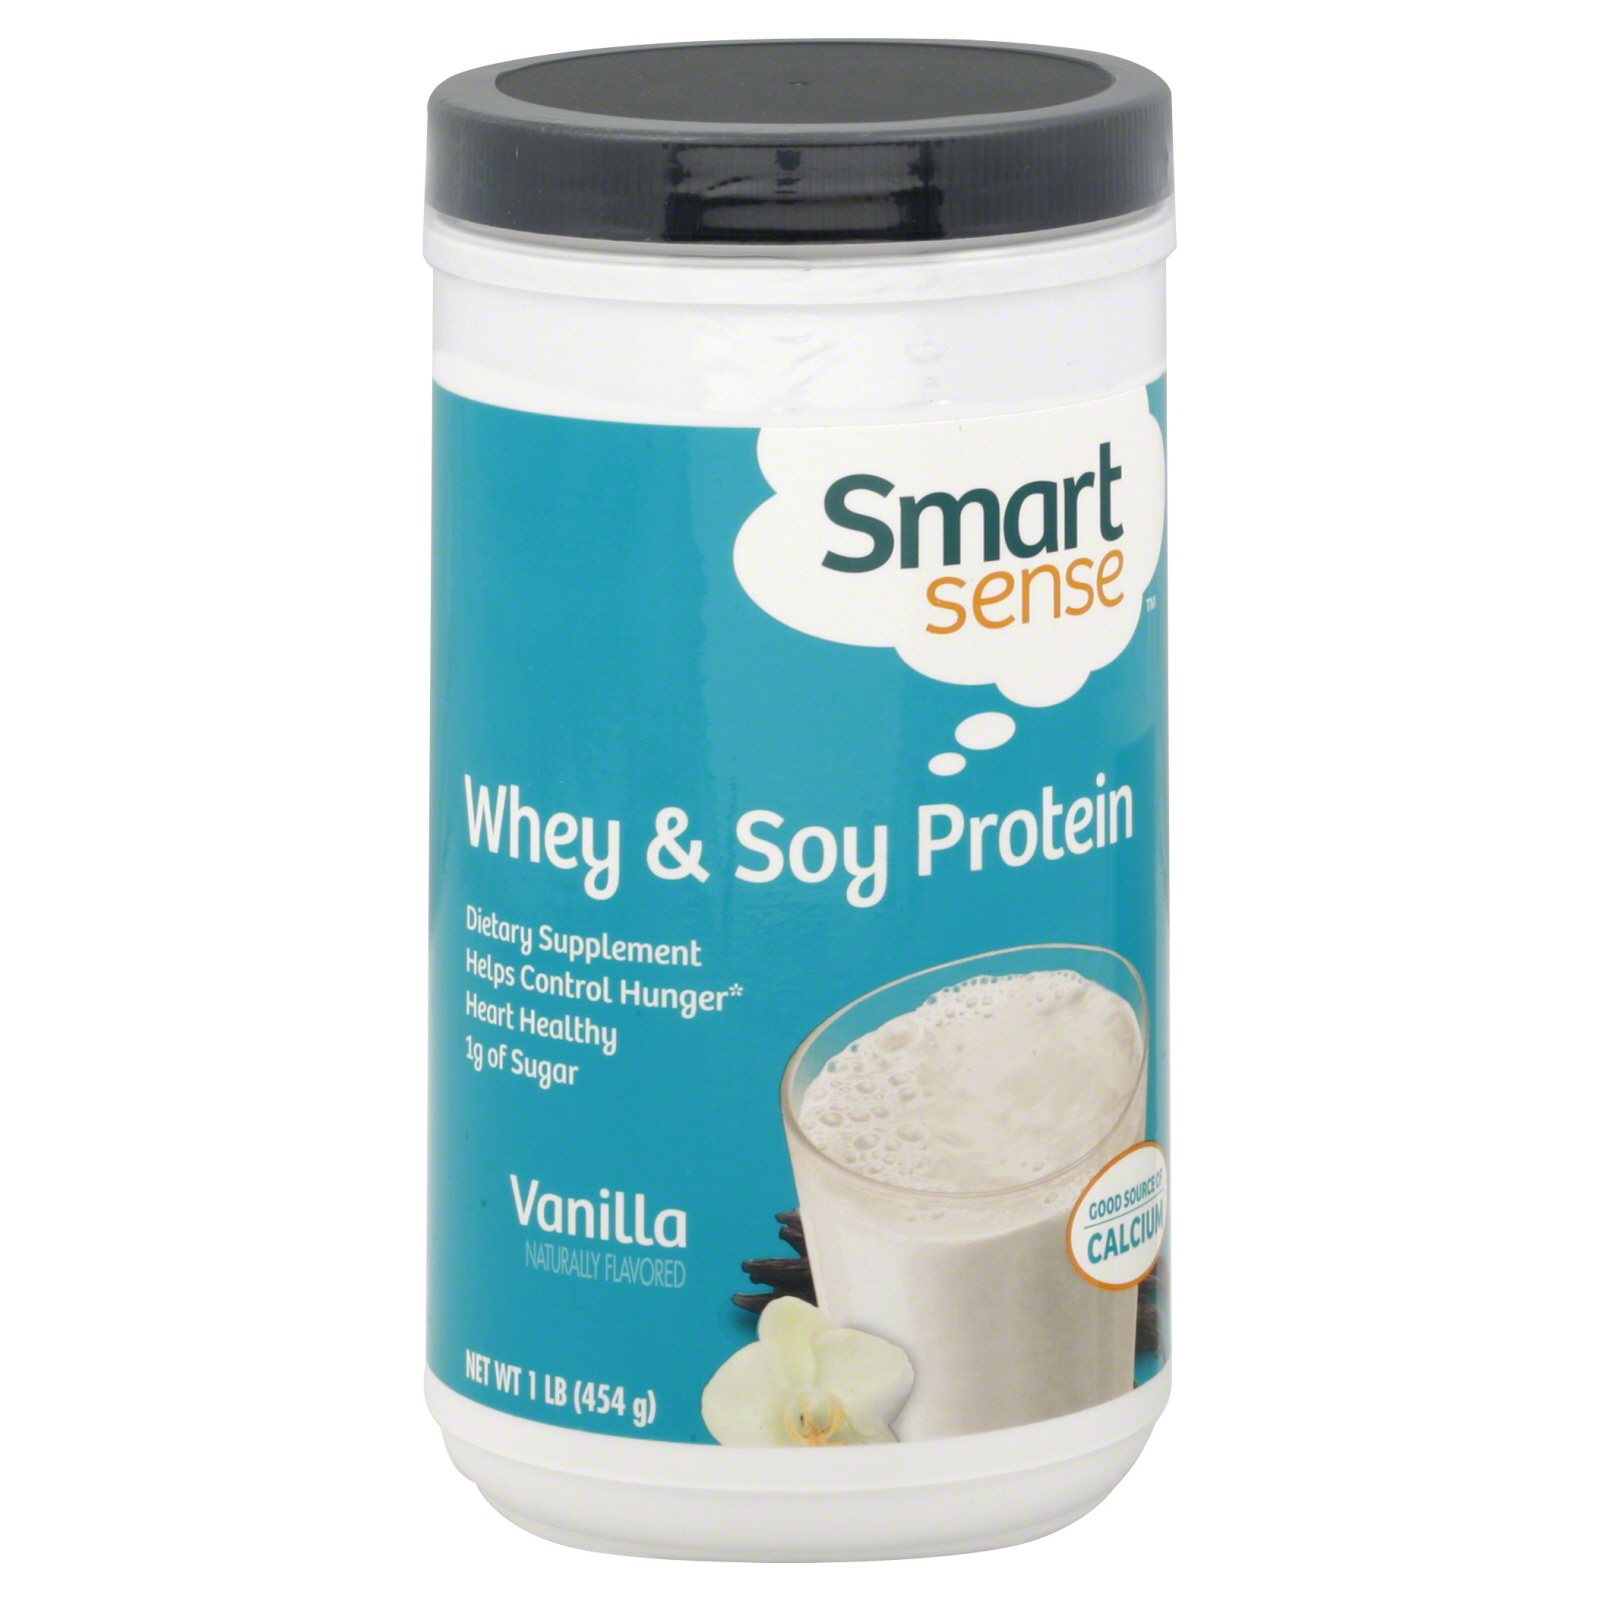 Smart Sense Whey & Soy Protein, Vanilla, 1 lb (454 g)